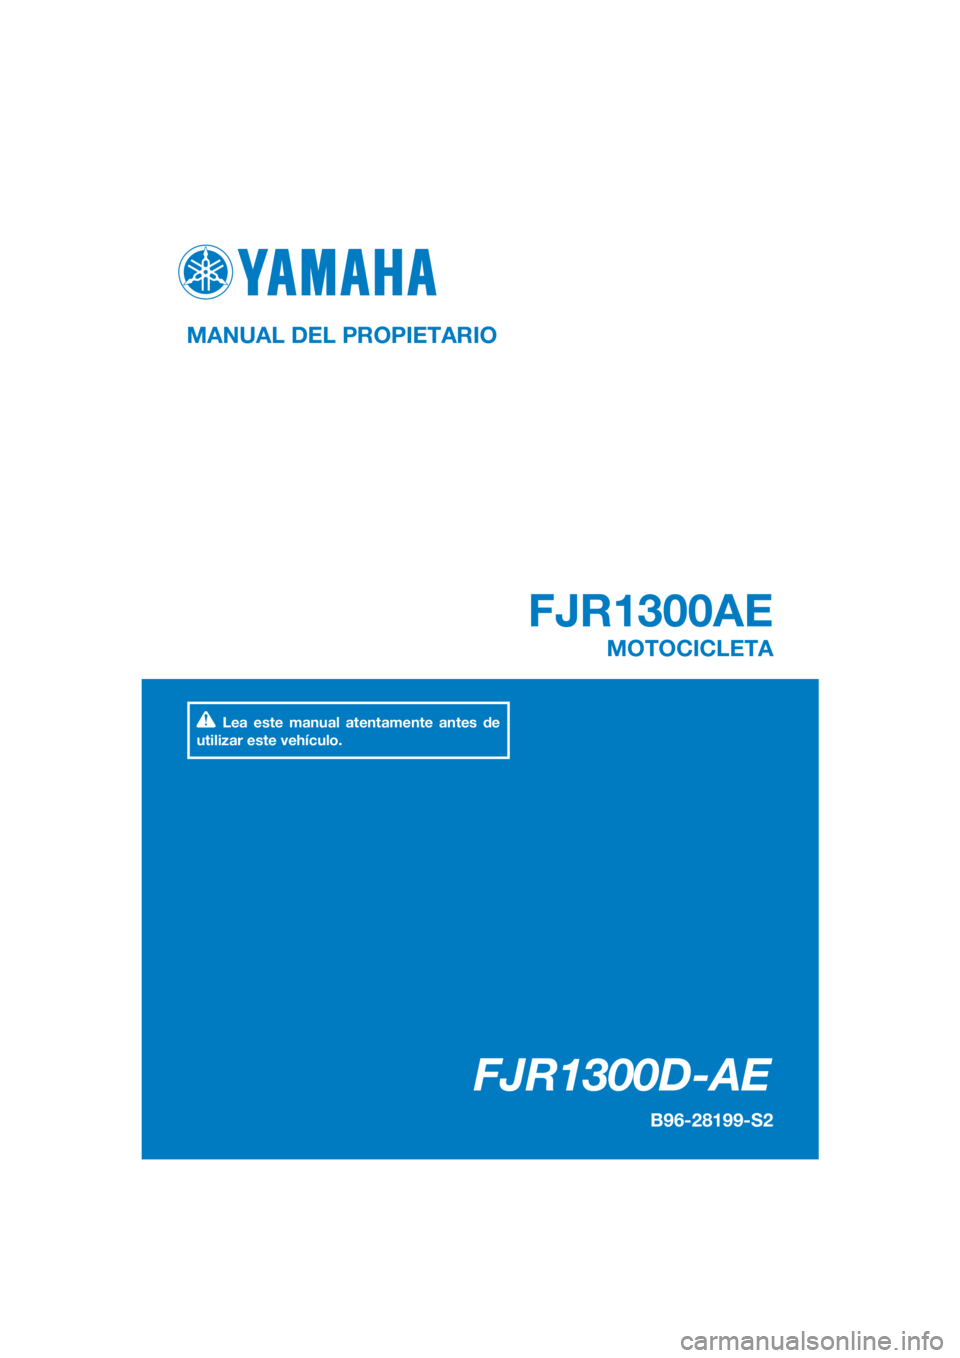 YAMAHA FJR1300AE 2020  Manuale de Empleo (in Spanish) 